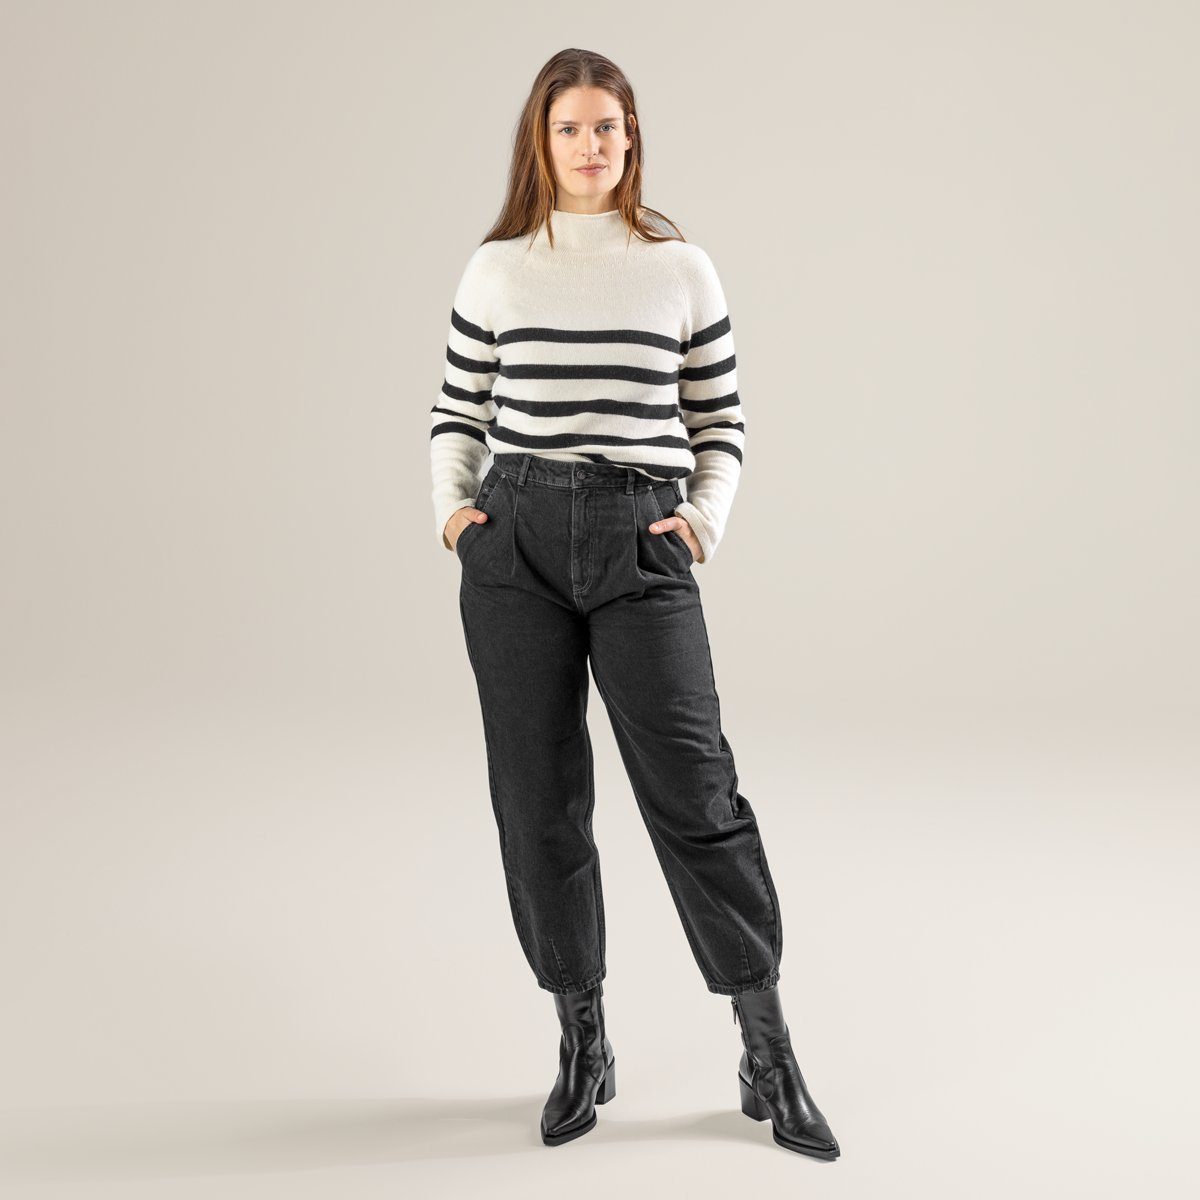 LIVING CRAFTS 5-Pocket-Hose PAULETTA Hochwertiger Black Passform Jeans-Stoff, großzügige angenehme